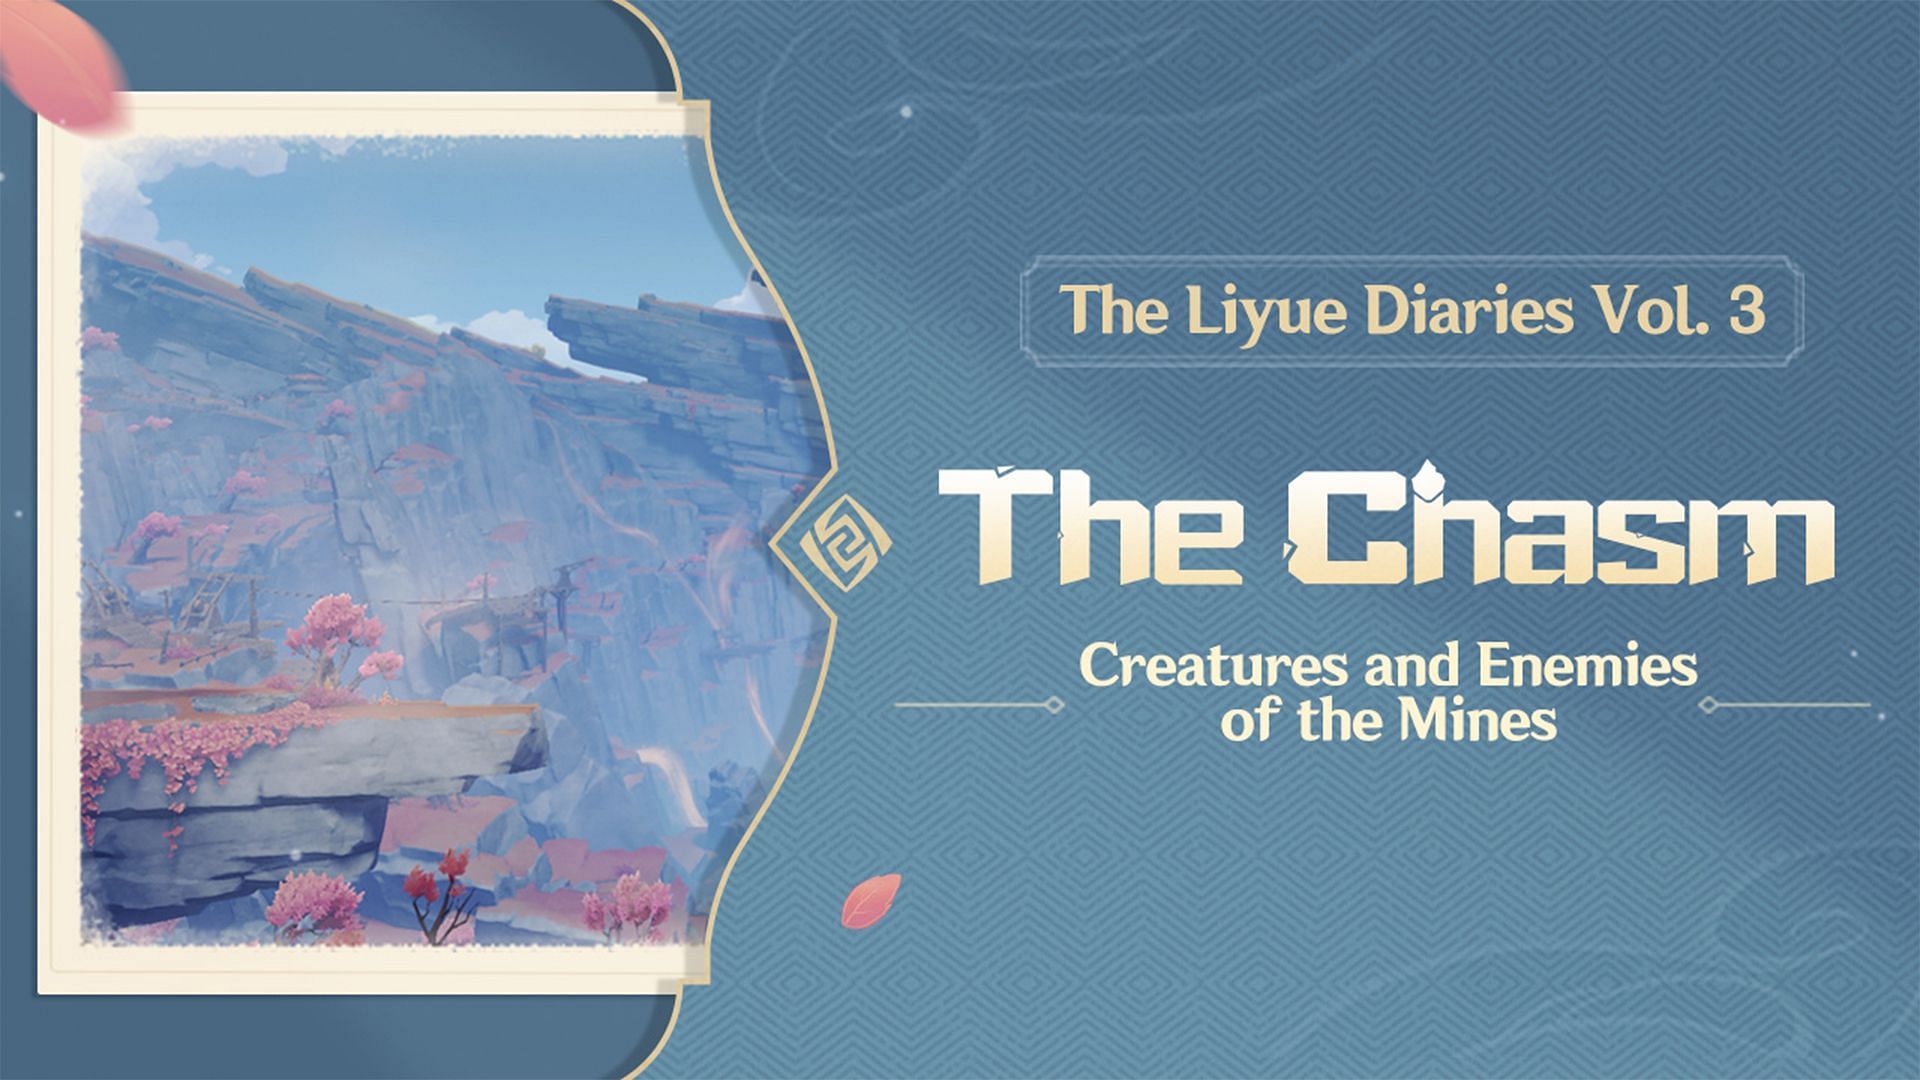 The Liyue Diaries Volume 3 (Image via HoYoverse)